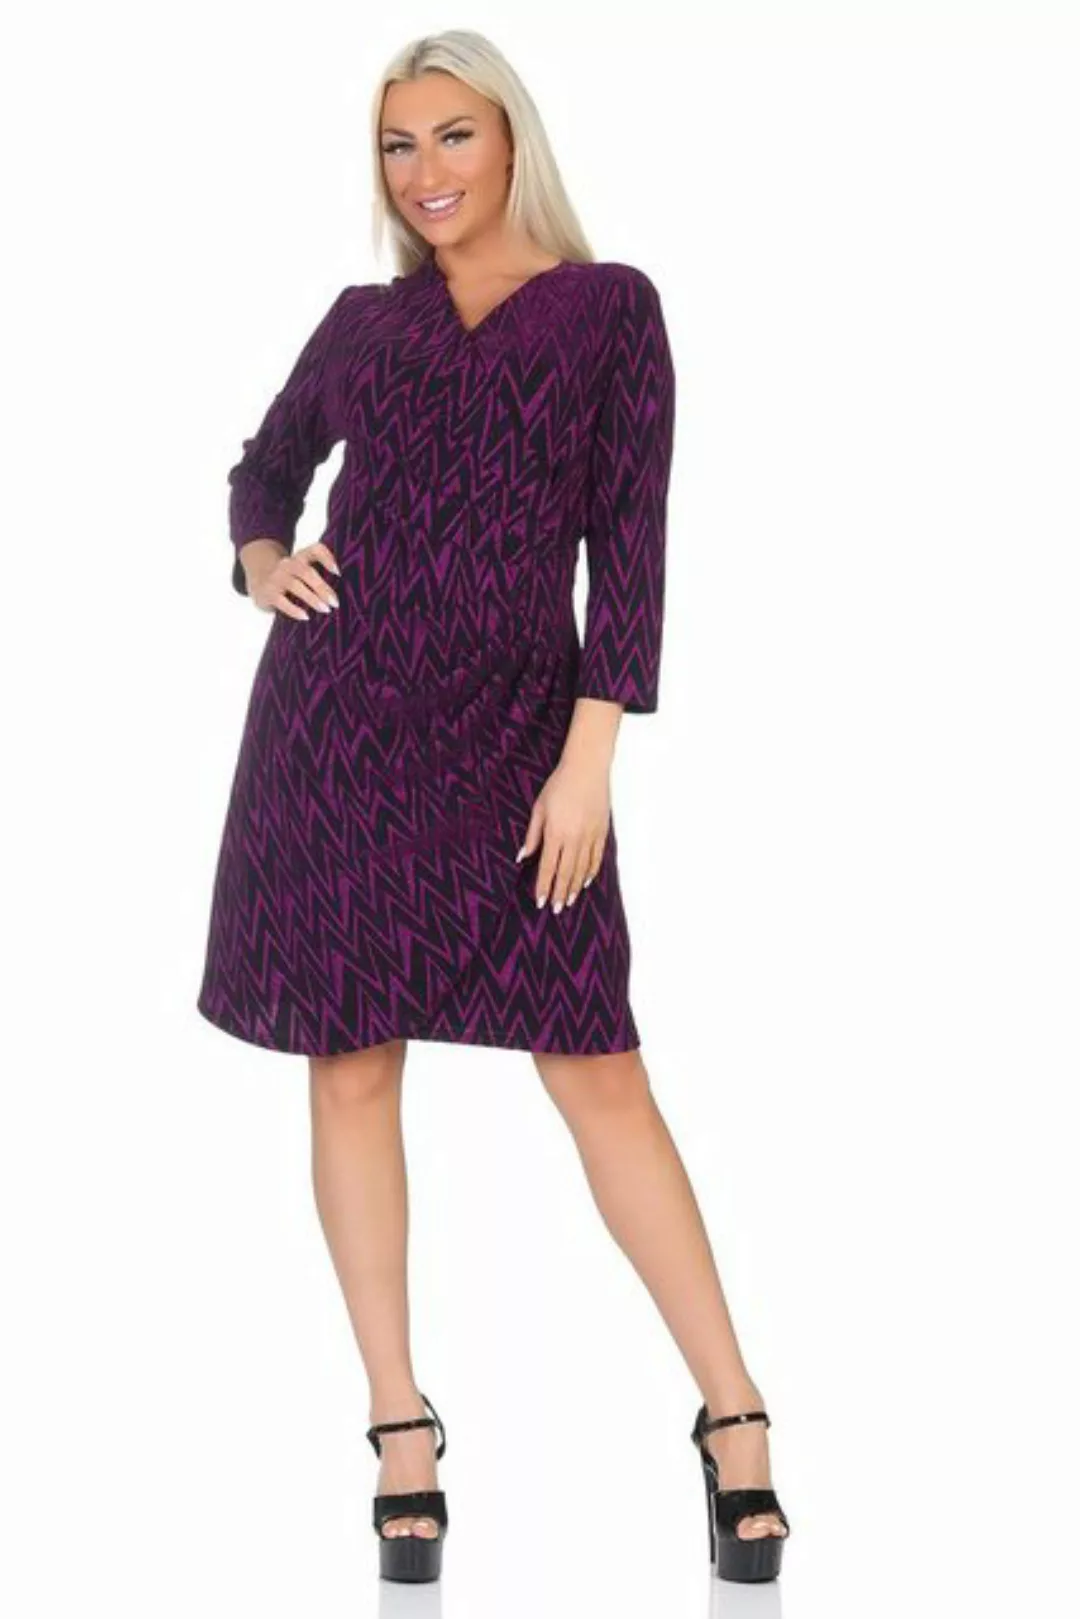 PM SELECTED Minikleid PM-088 (Edles Abend Minikleid Jersey Abendkleid in Wi günstig online kaufen